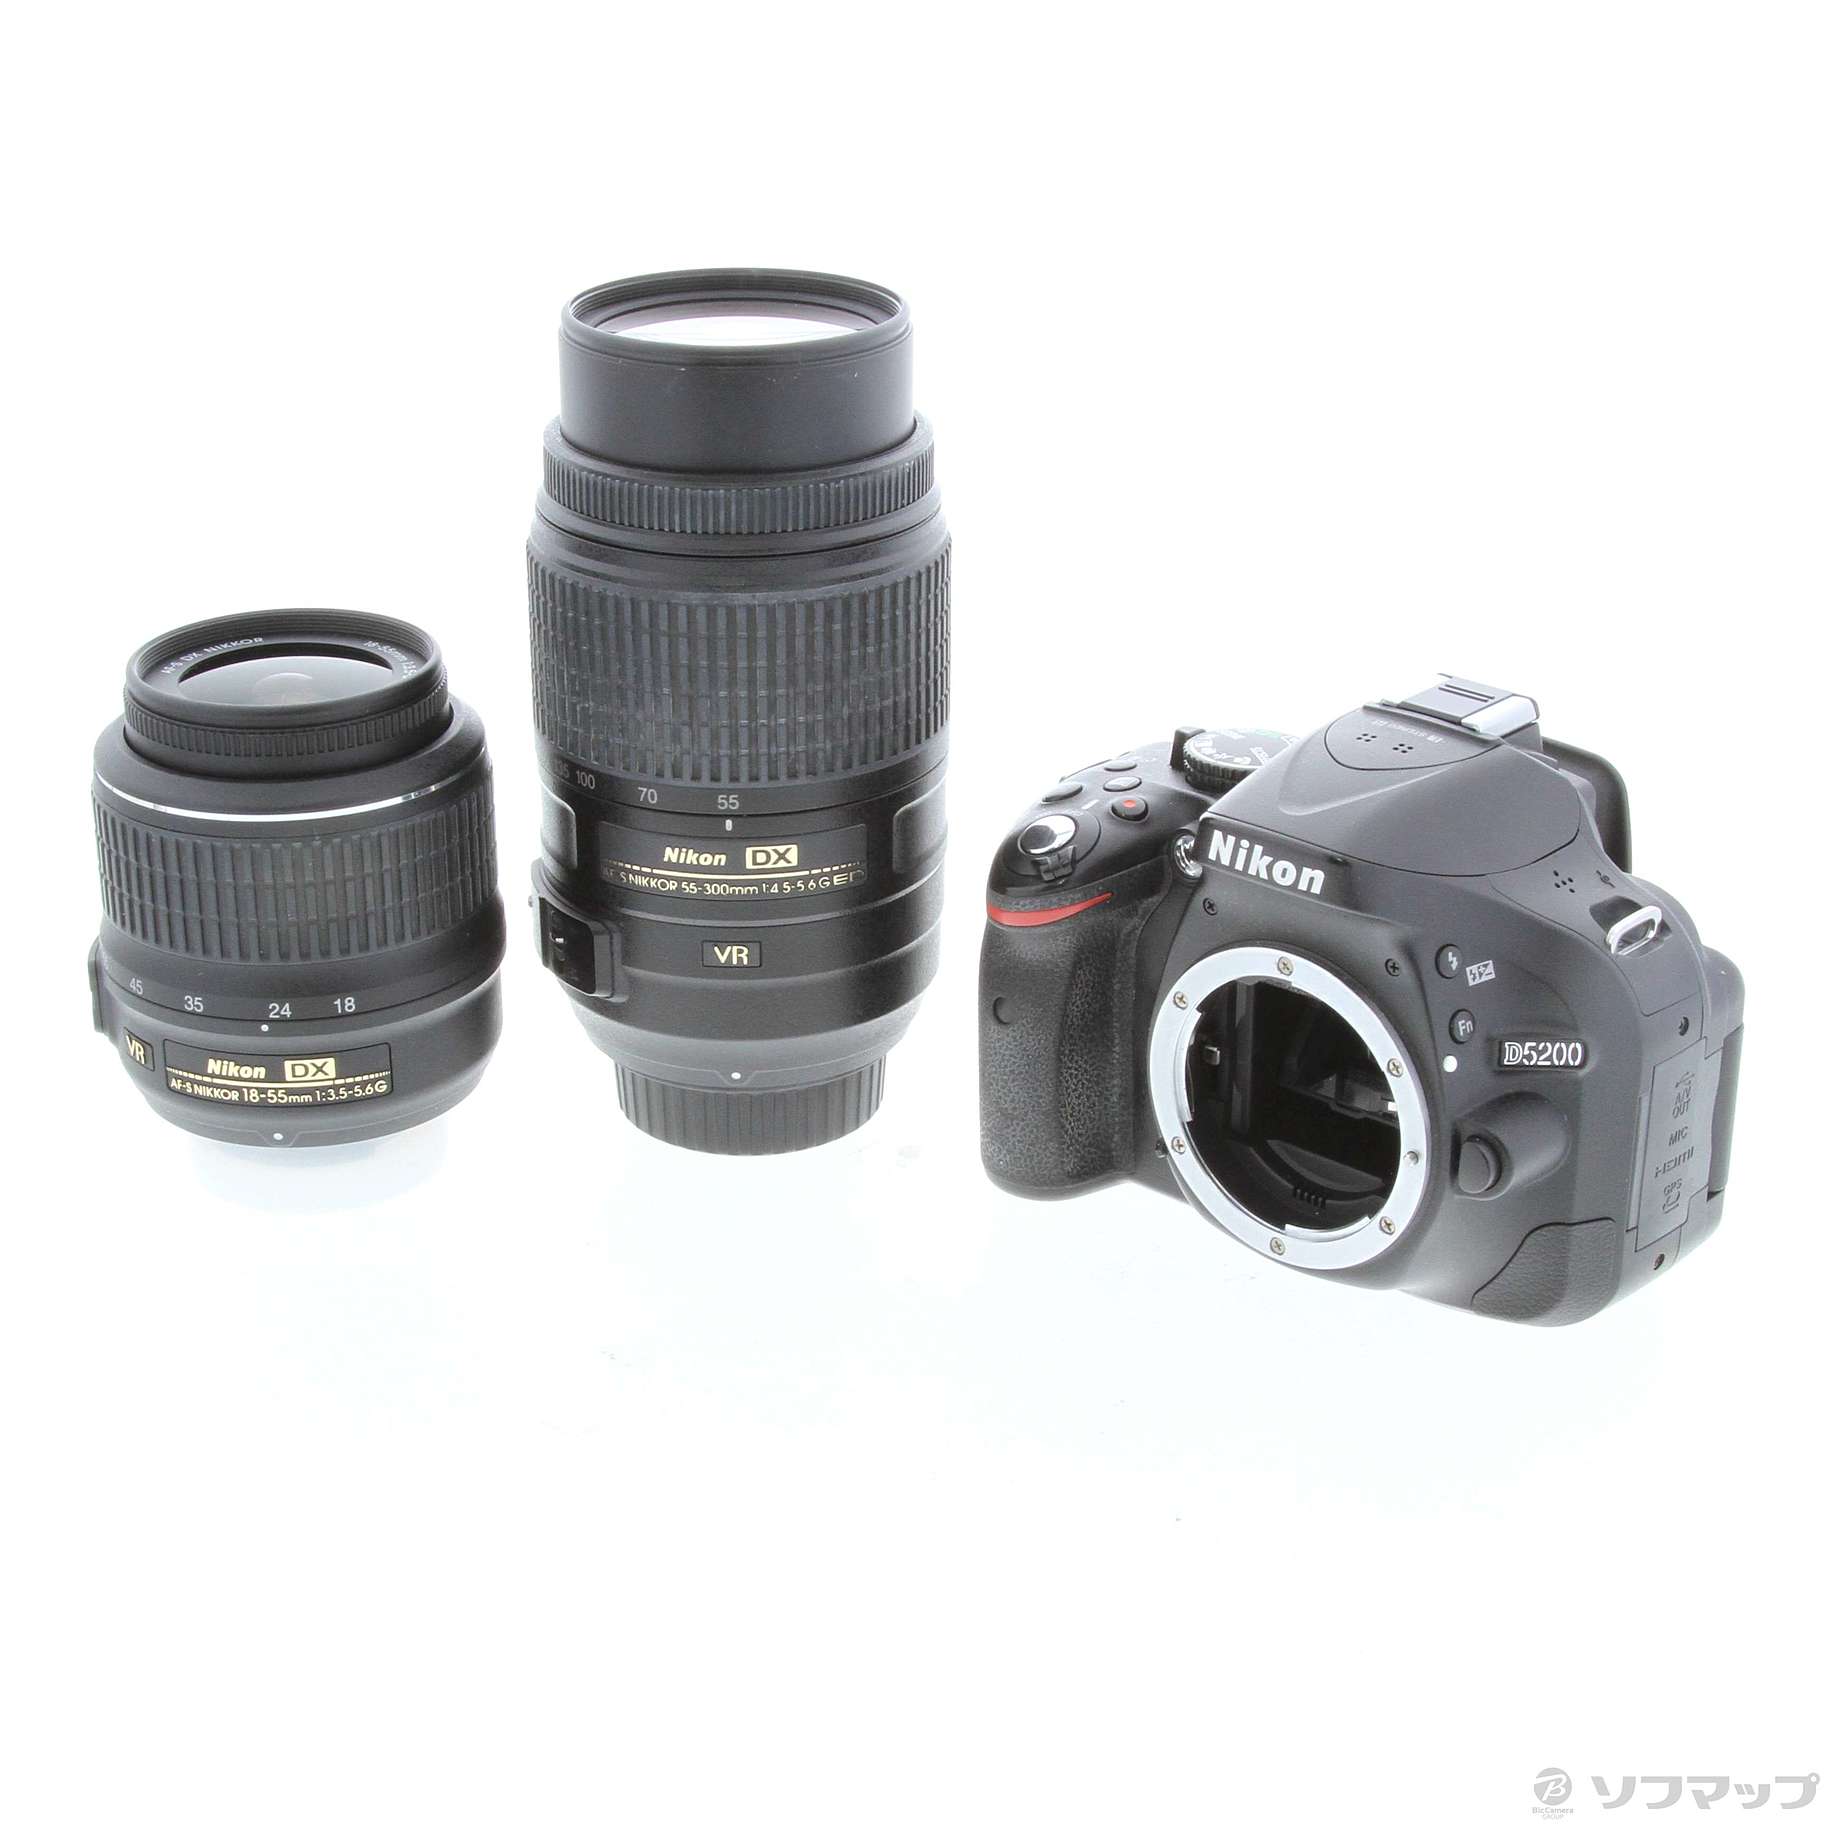 SALE10%OFF Nikon D5200 Wズームキット BLACK | www.takalamtech.com